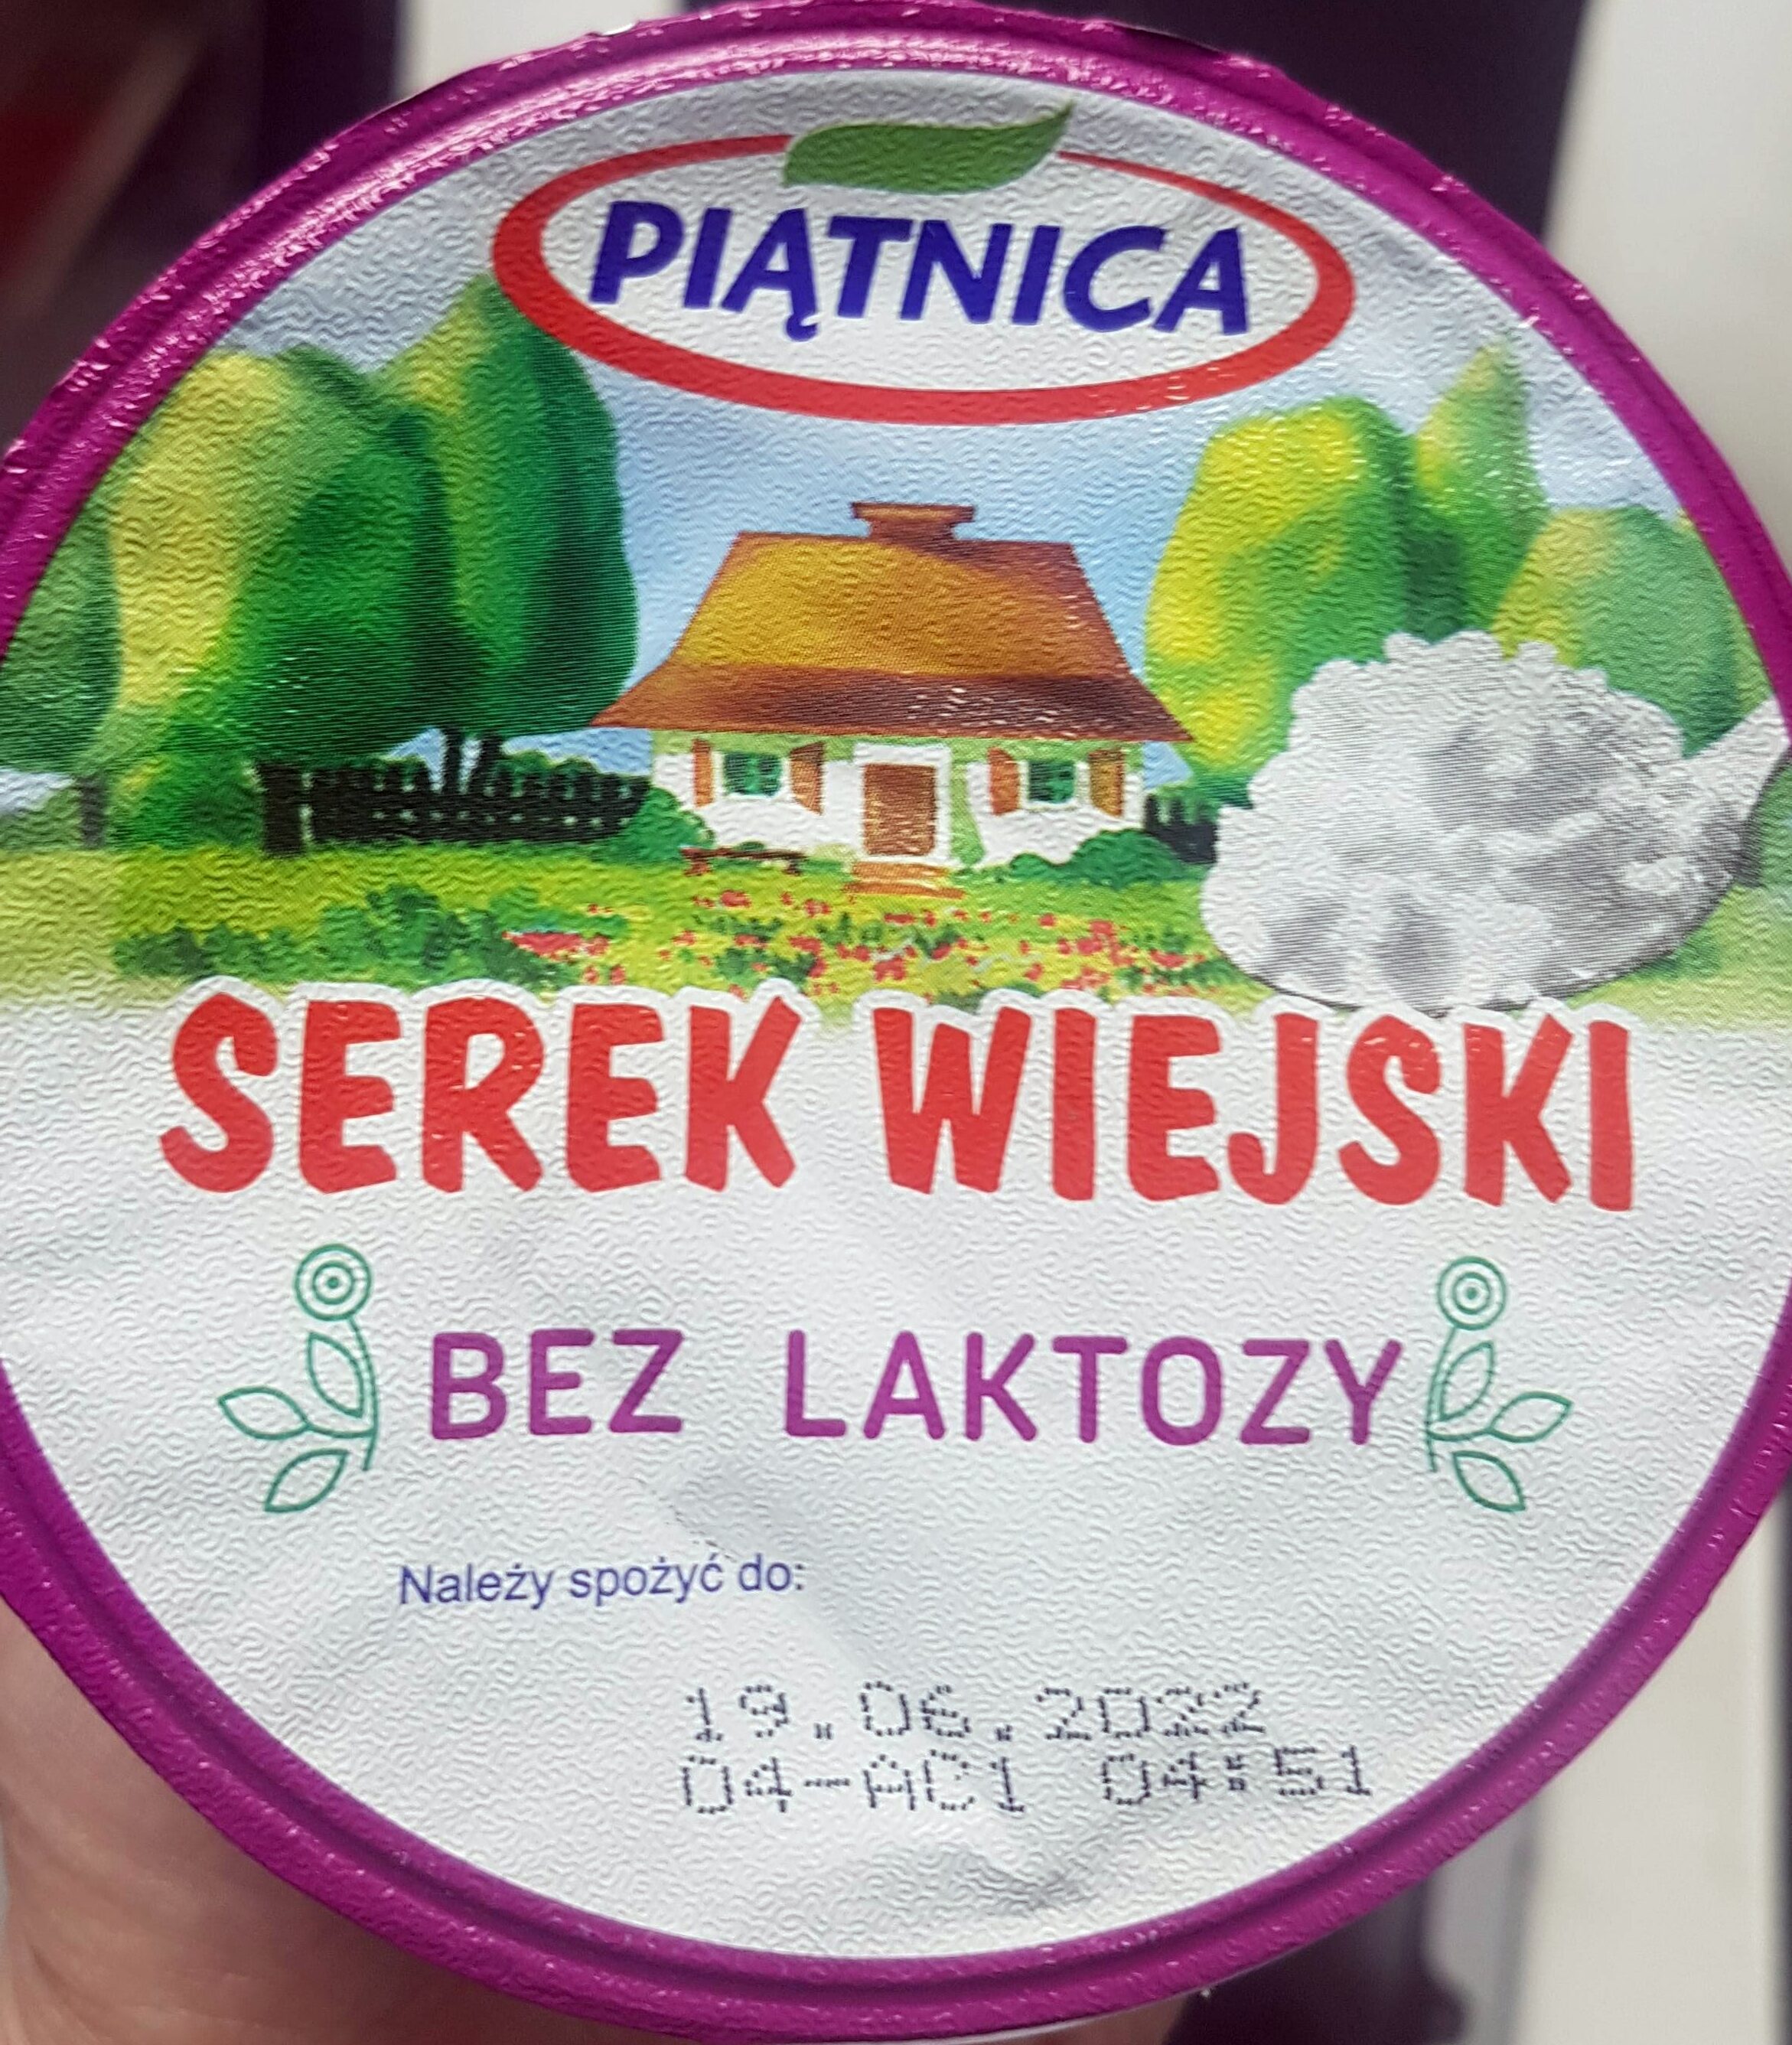 Serek wiejski bez laktozy - Product - pl